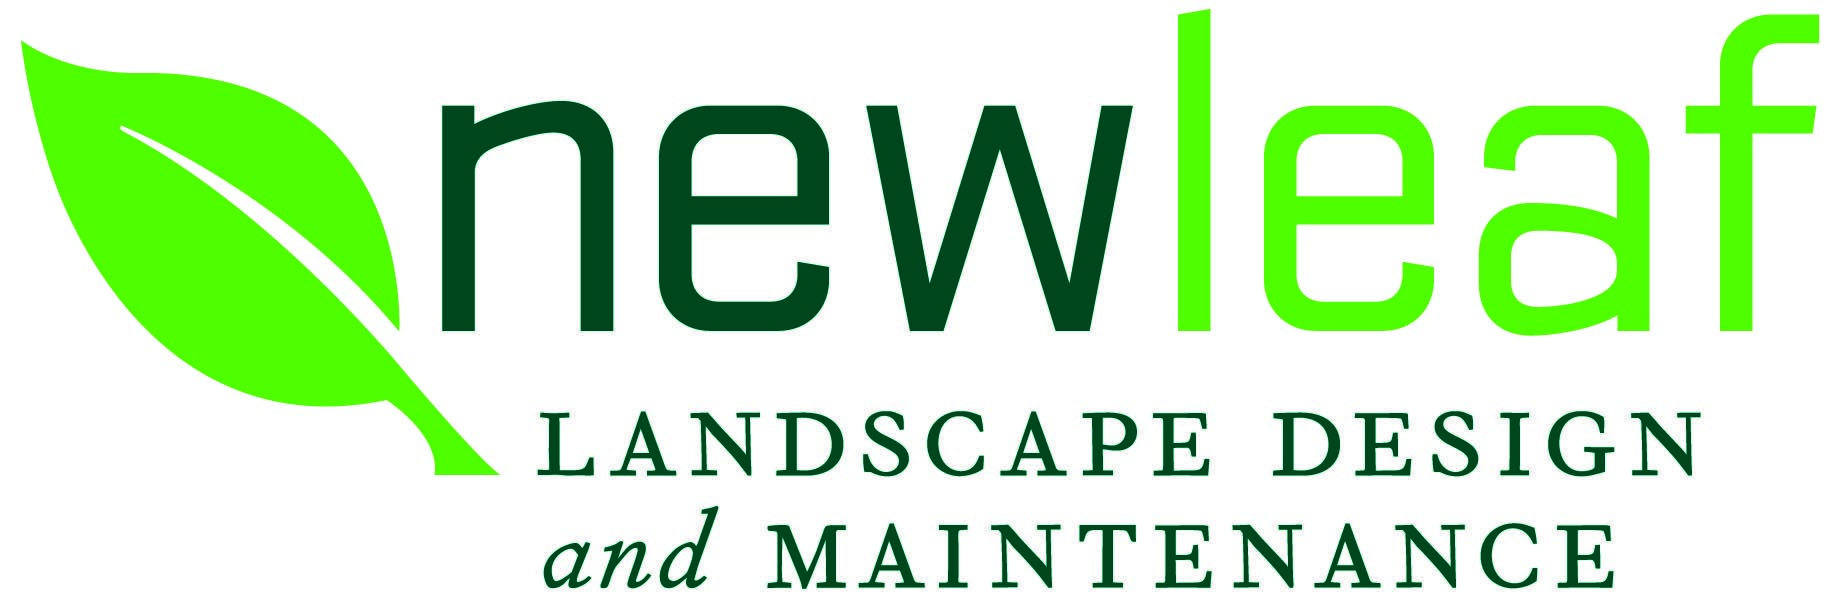 New Leaf Logo - New Leaf Landscape Design and Maintenance: Idaho Falls Landscaping